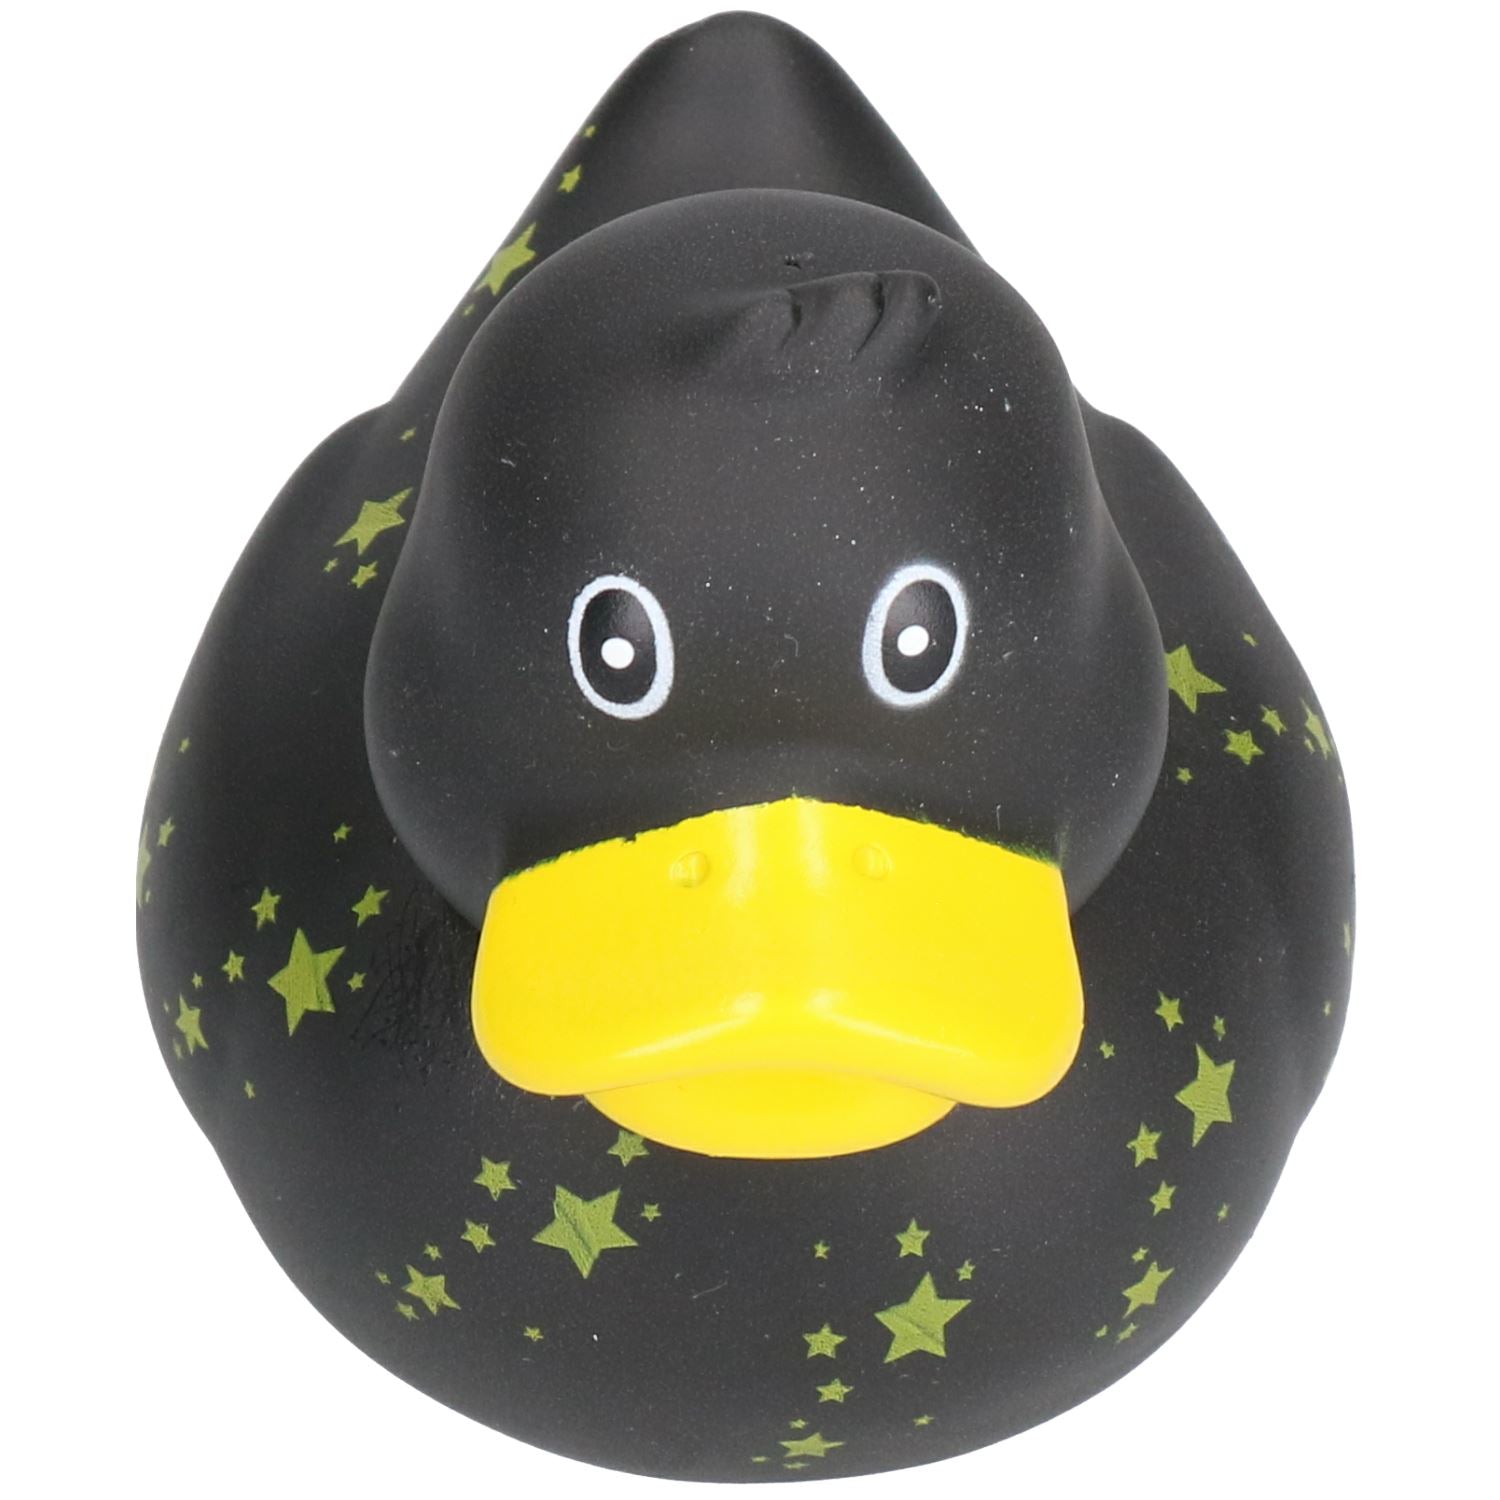 Black Star Rubber Vinyl Squeaky Duck Dog Toy With Internal Squeak 8x10cm